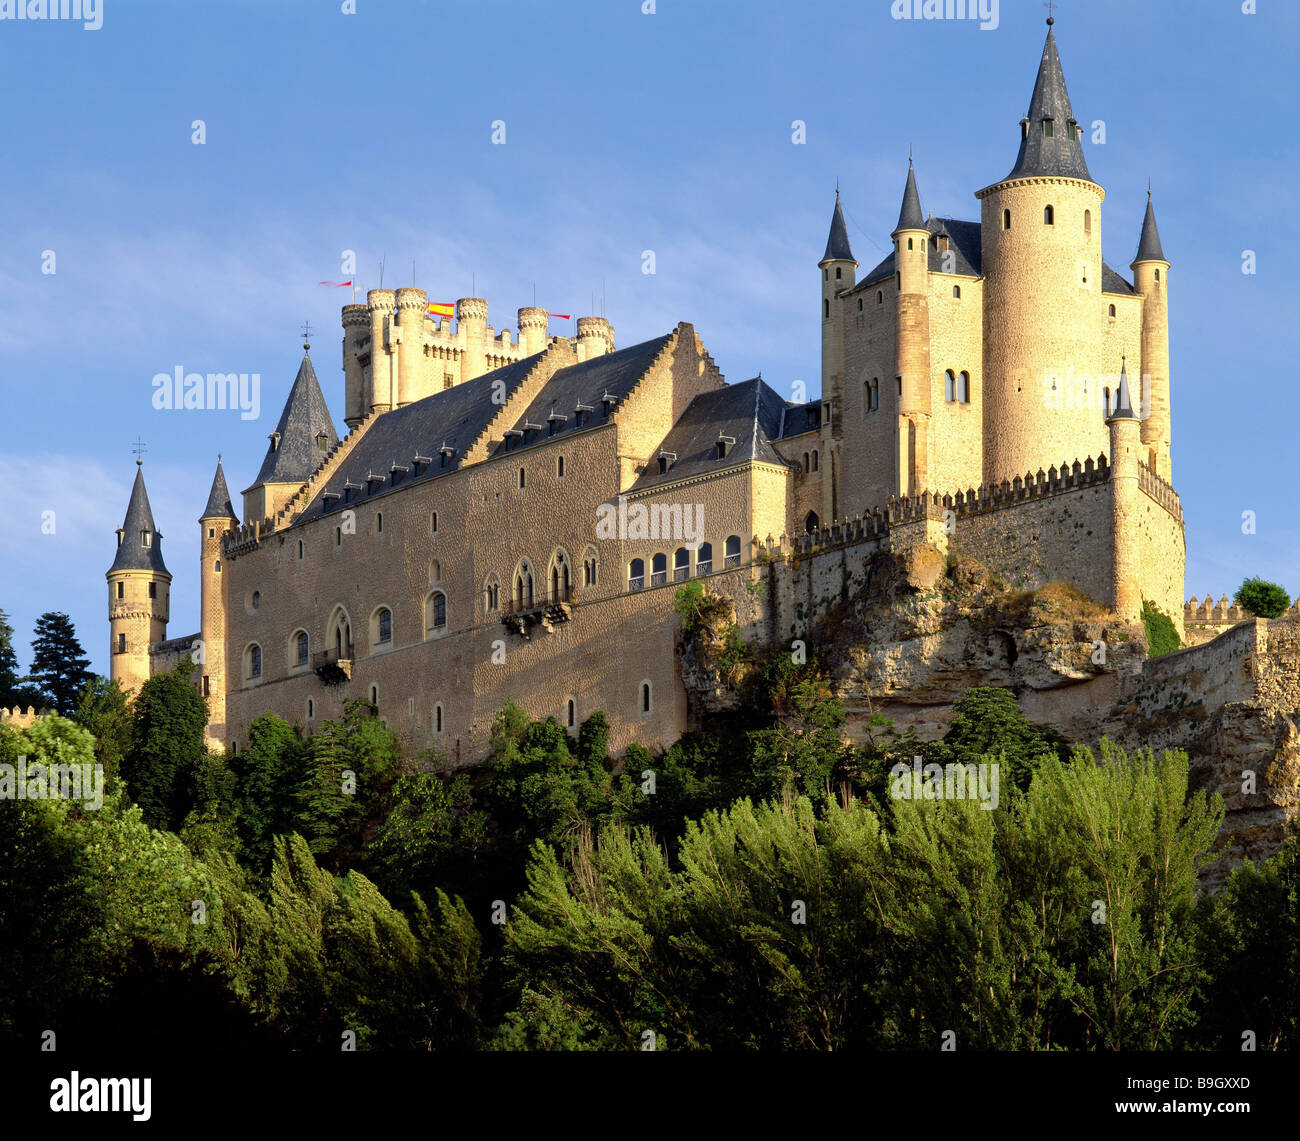 Spanien Kastilien Segovia Alcazar Burg Festung Palast Palace-Gebäude Schloss  komplexer Gebäude Bau Architektur Stockfotografie - Alamy